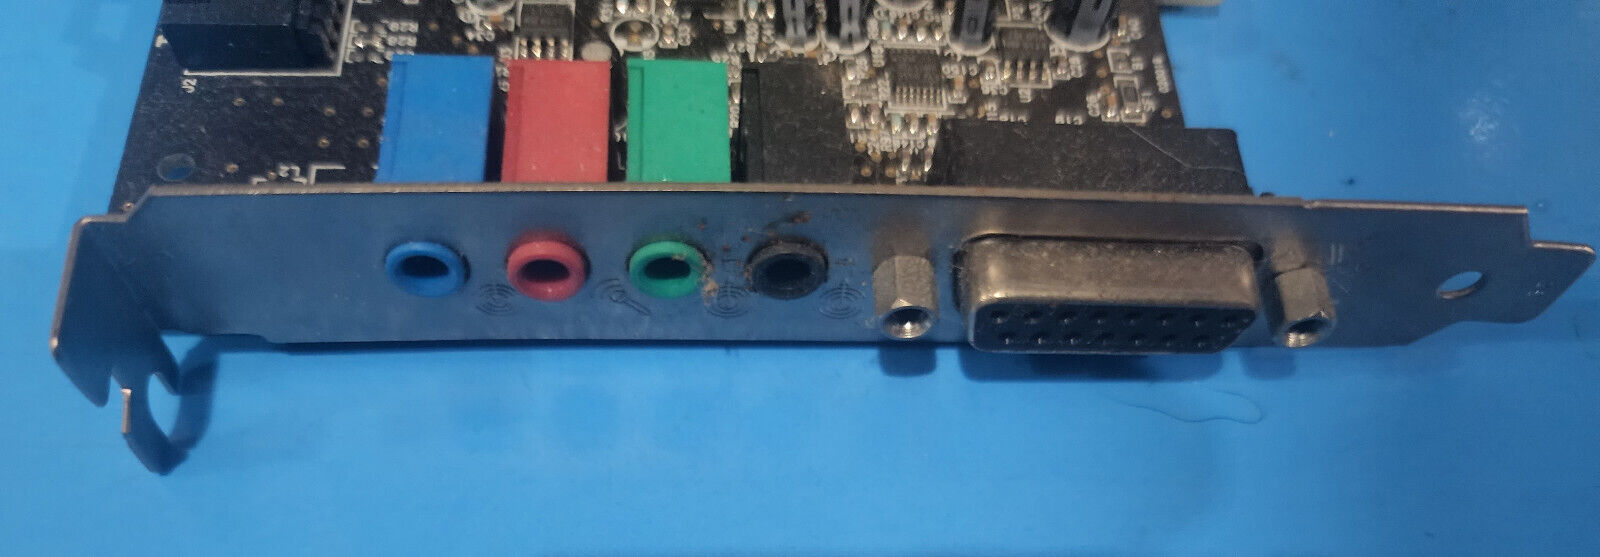 Vintage 2000 Creative Labs CT4870 Sound Blaster Live PCI sound card EMU10K1-SFF